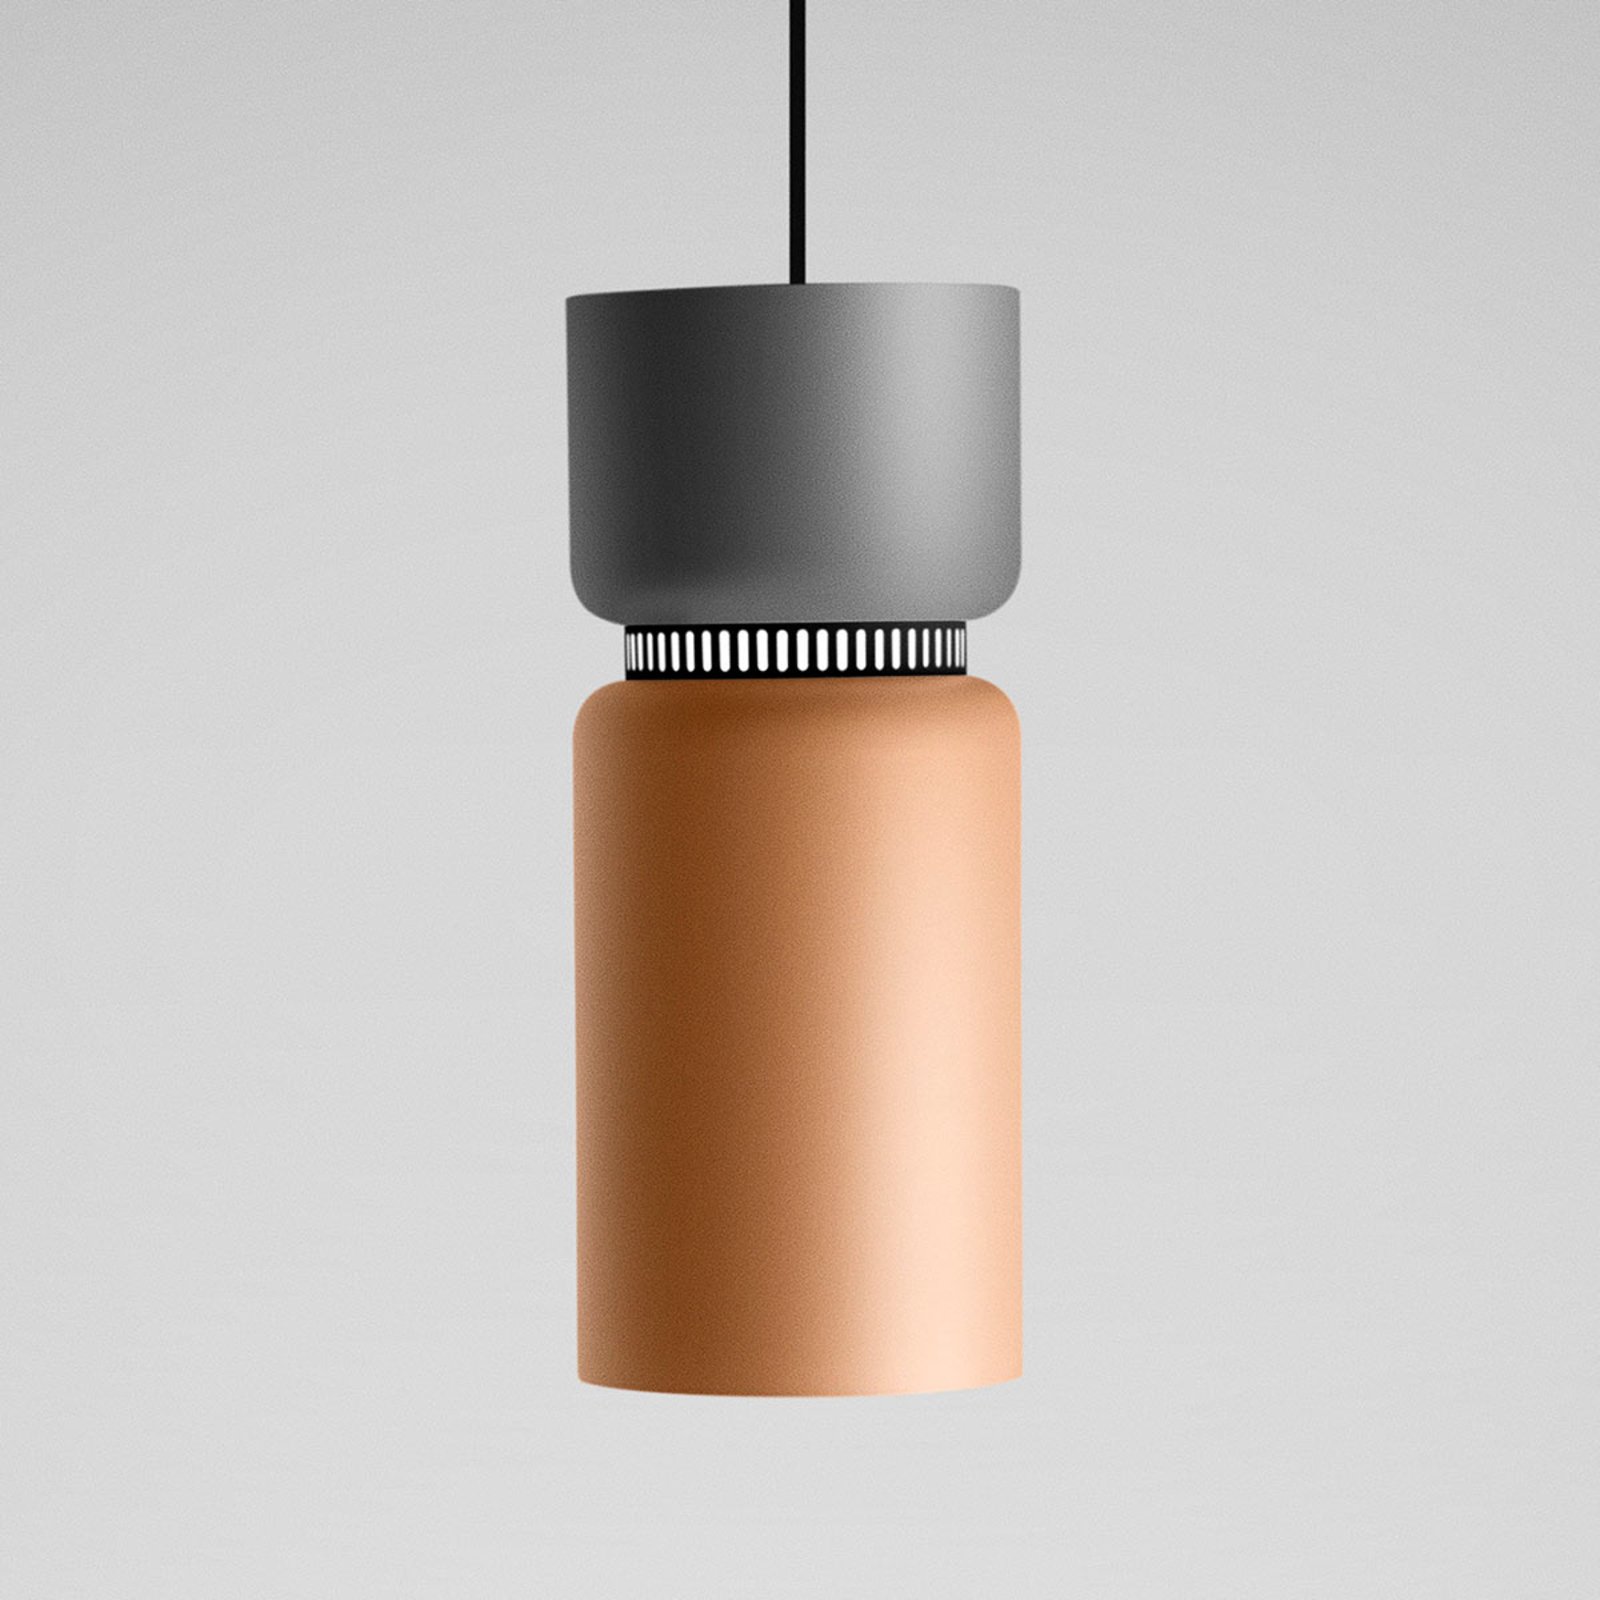 LED-hængelampe Aspen S grå-mango 17 cm, lang